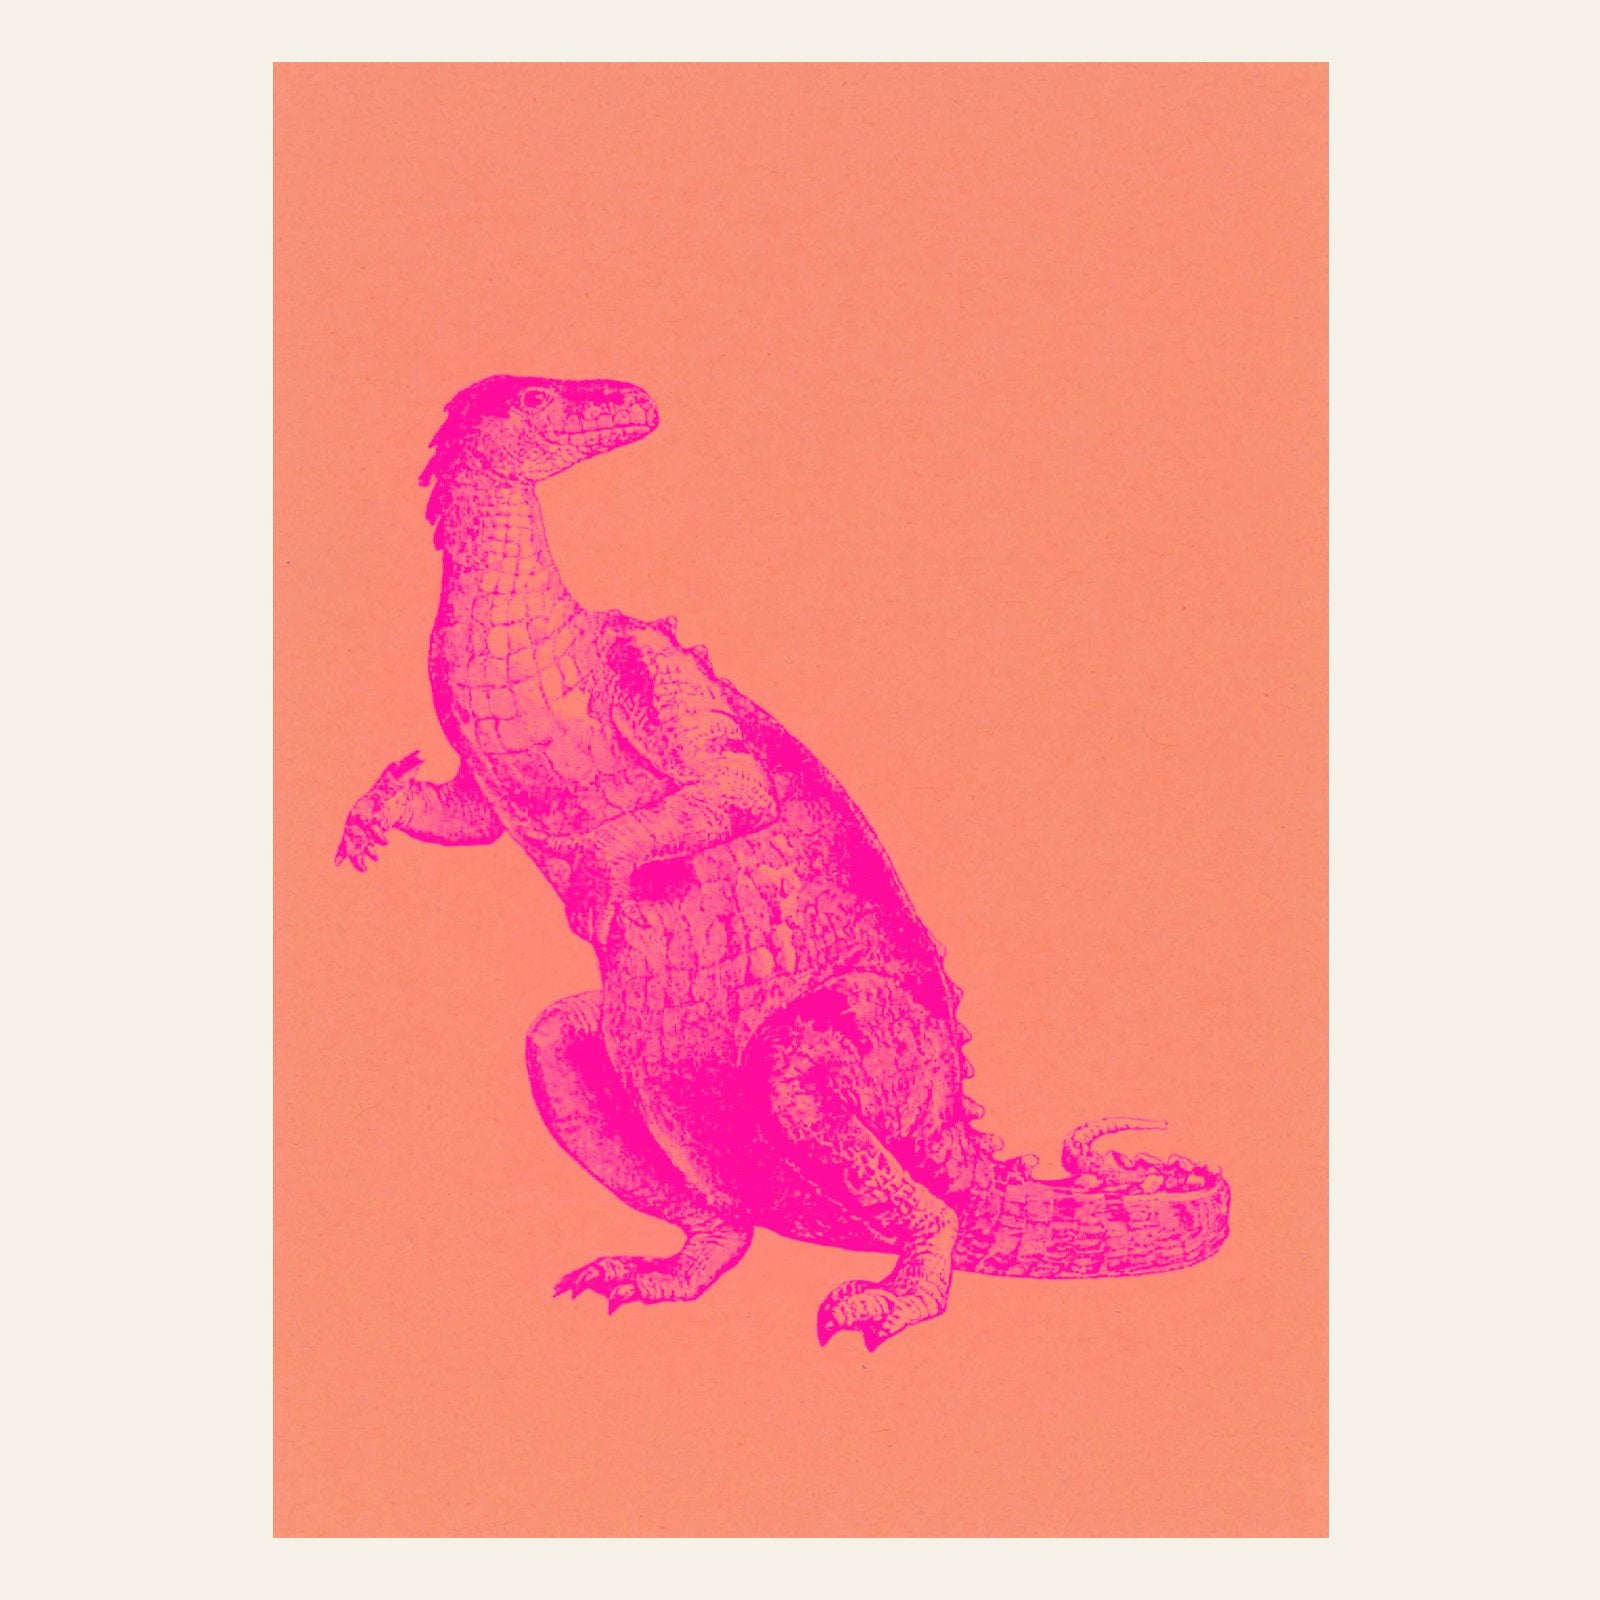 Herr & Frau Rio Karte Postkarte Risographie Riso Druck Tyrannosaurus Dinosaurier